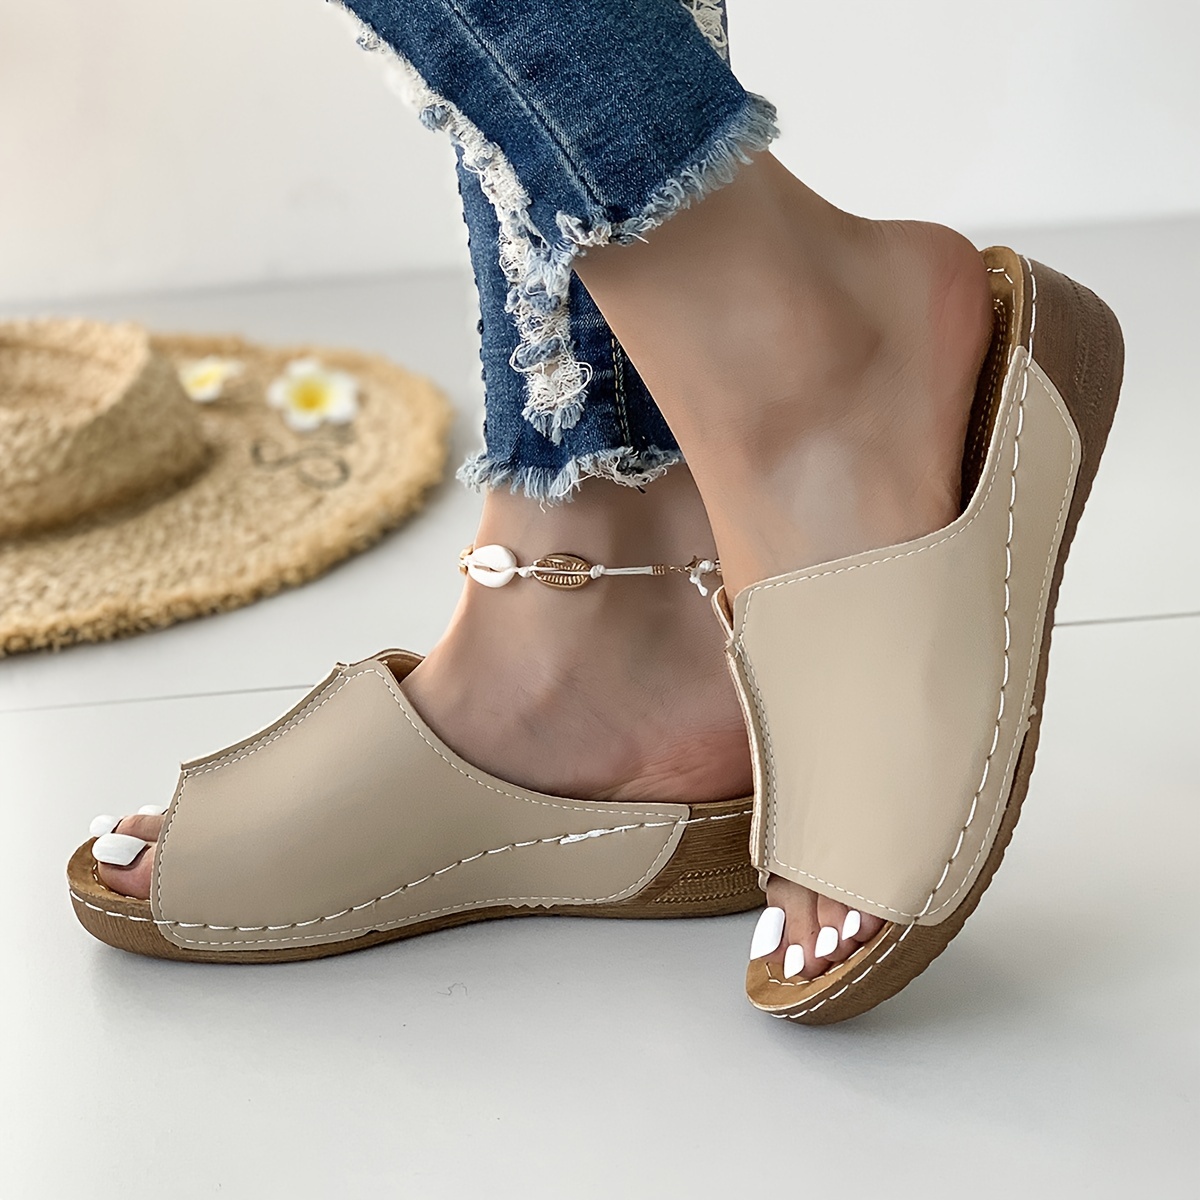 solid color stylish sandals women s platform slip soft sole details 8